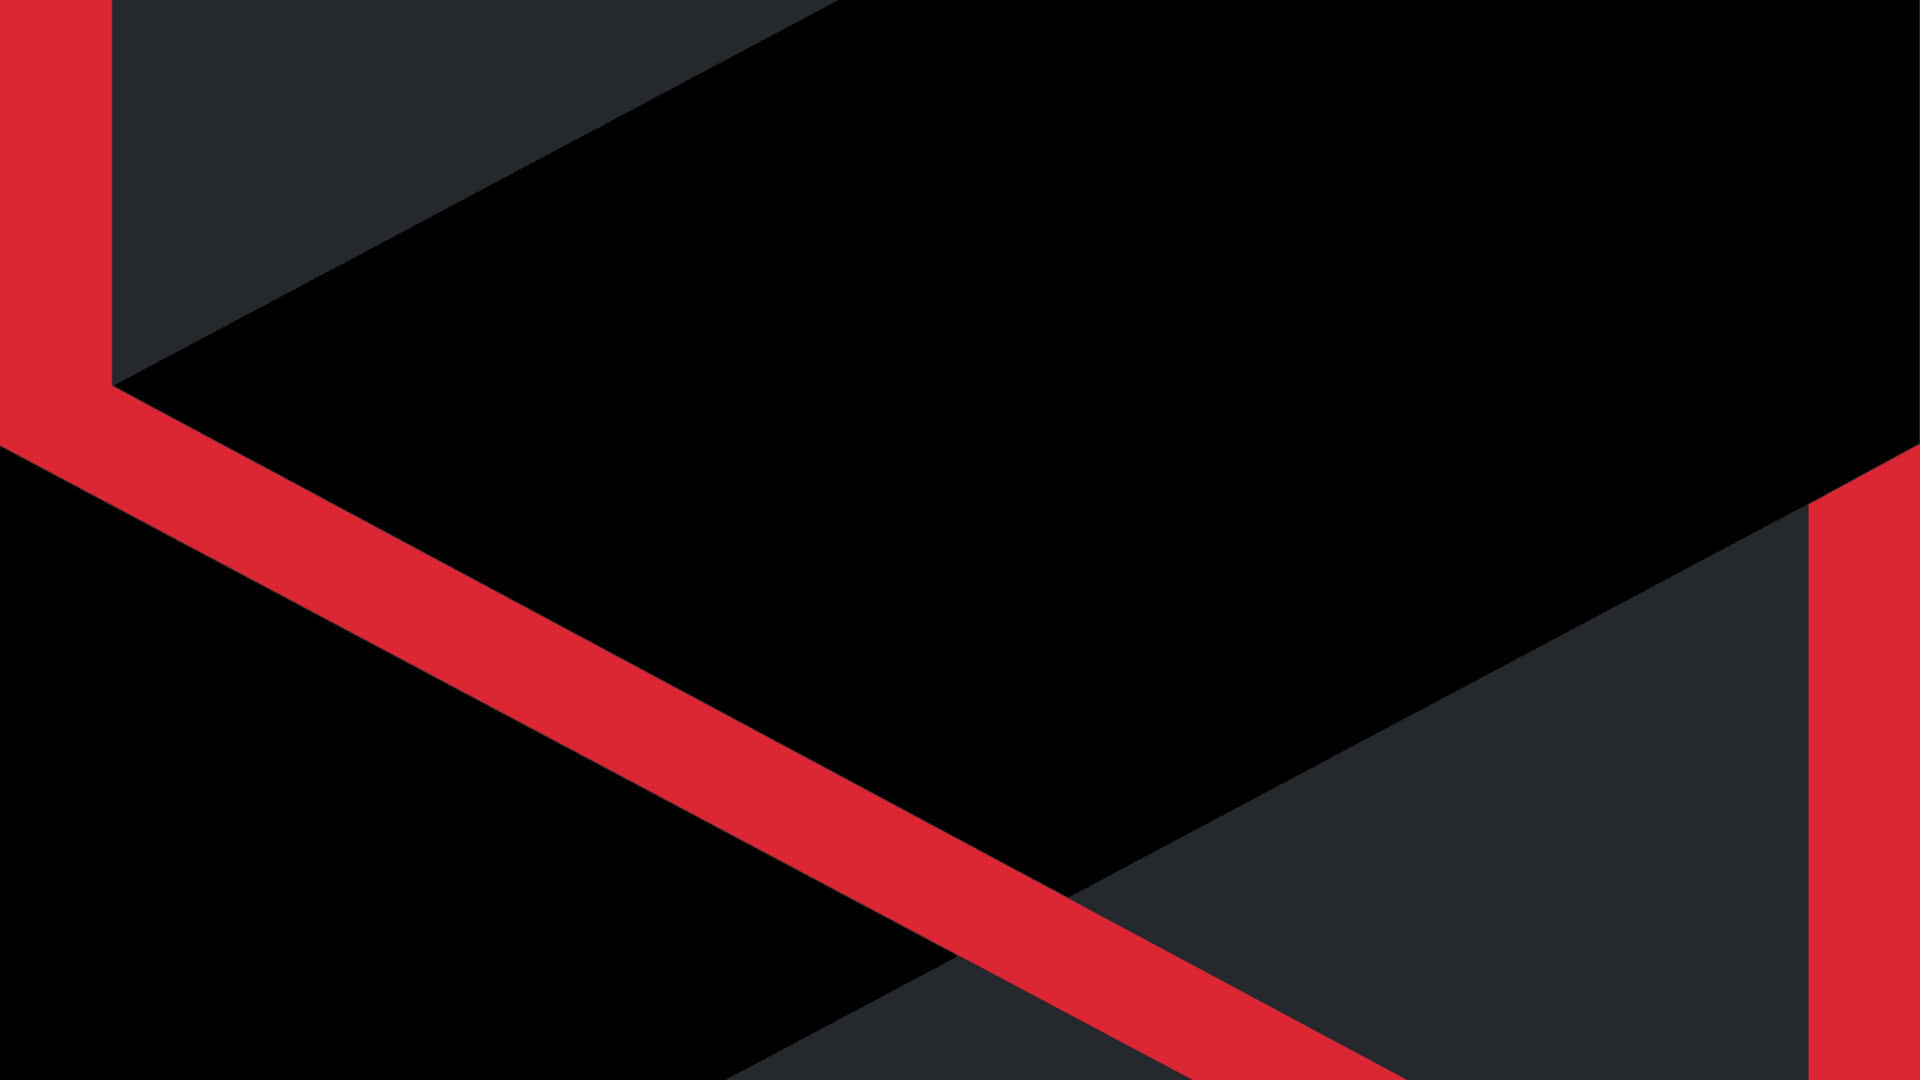 Sleek MKBHD Logo on a Fiber Carbon Background Wallpaper